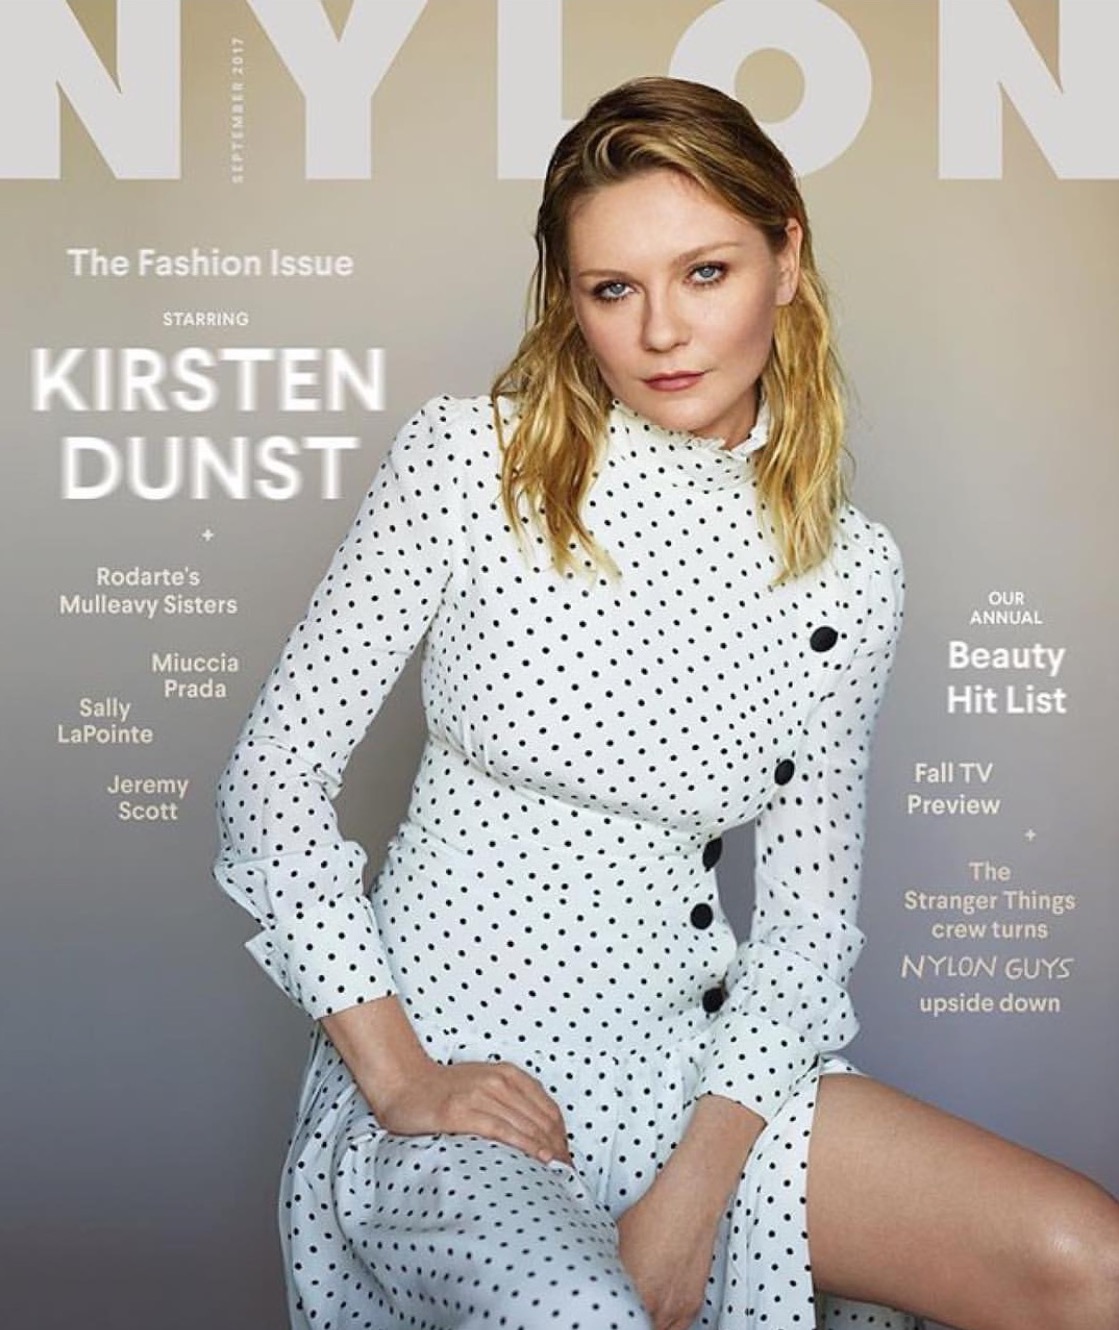 Kirsten Dunst x Nylon Magazine